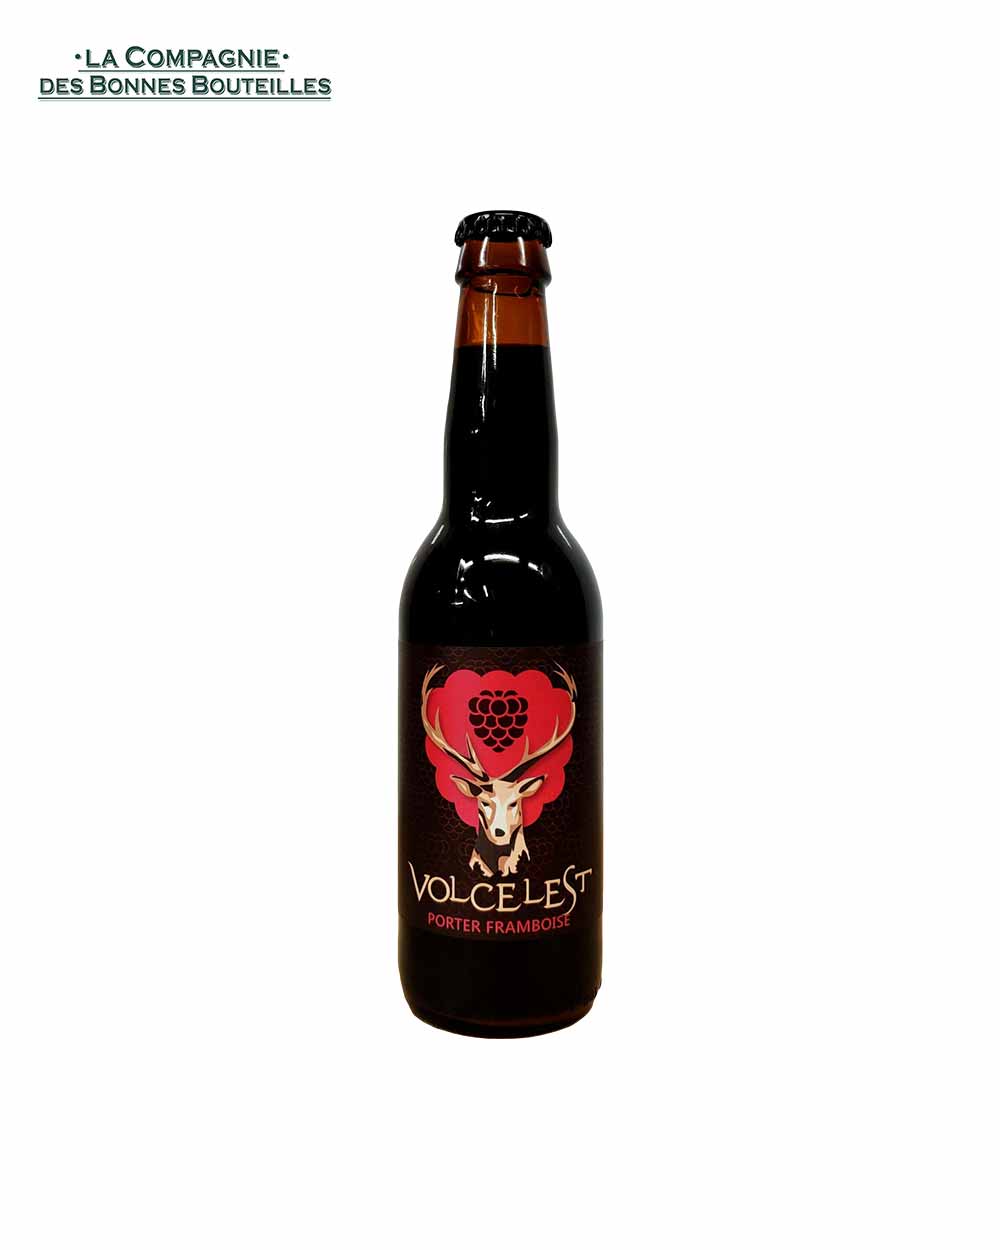 Bière Volcelest - porter framboise VP 33cl